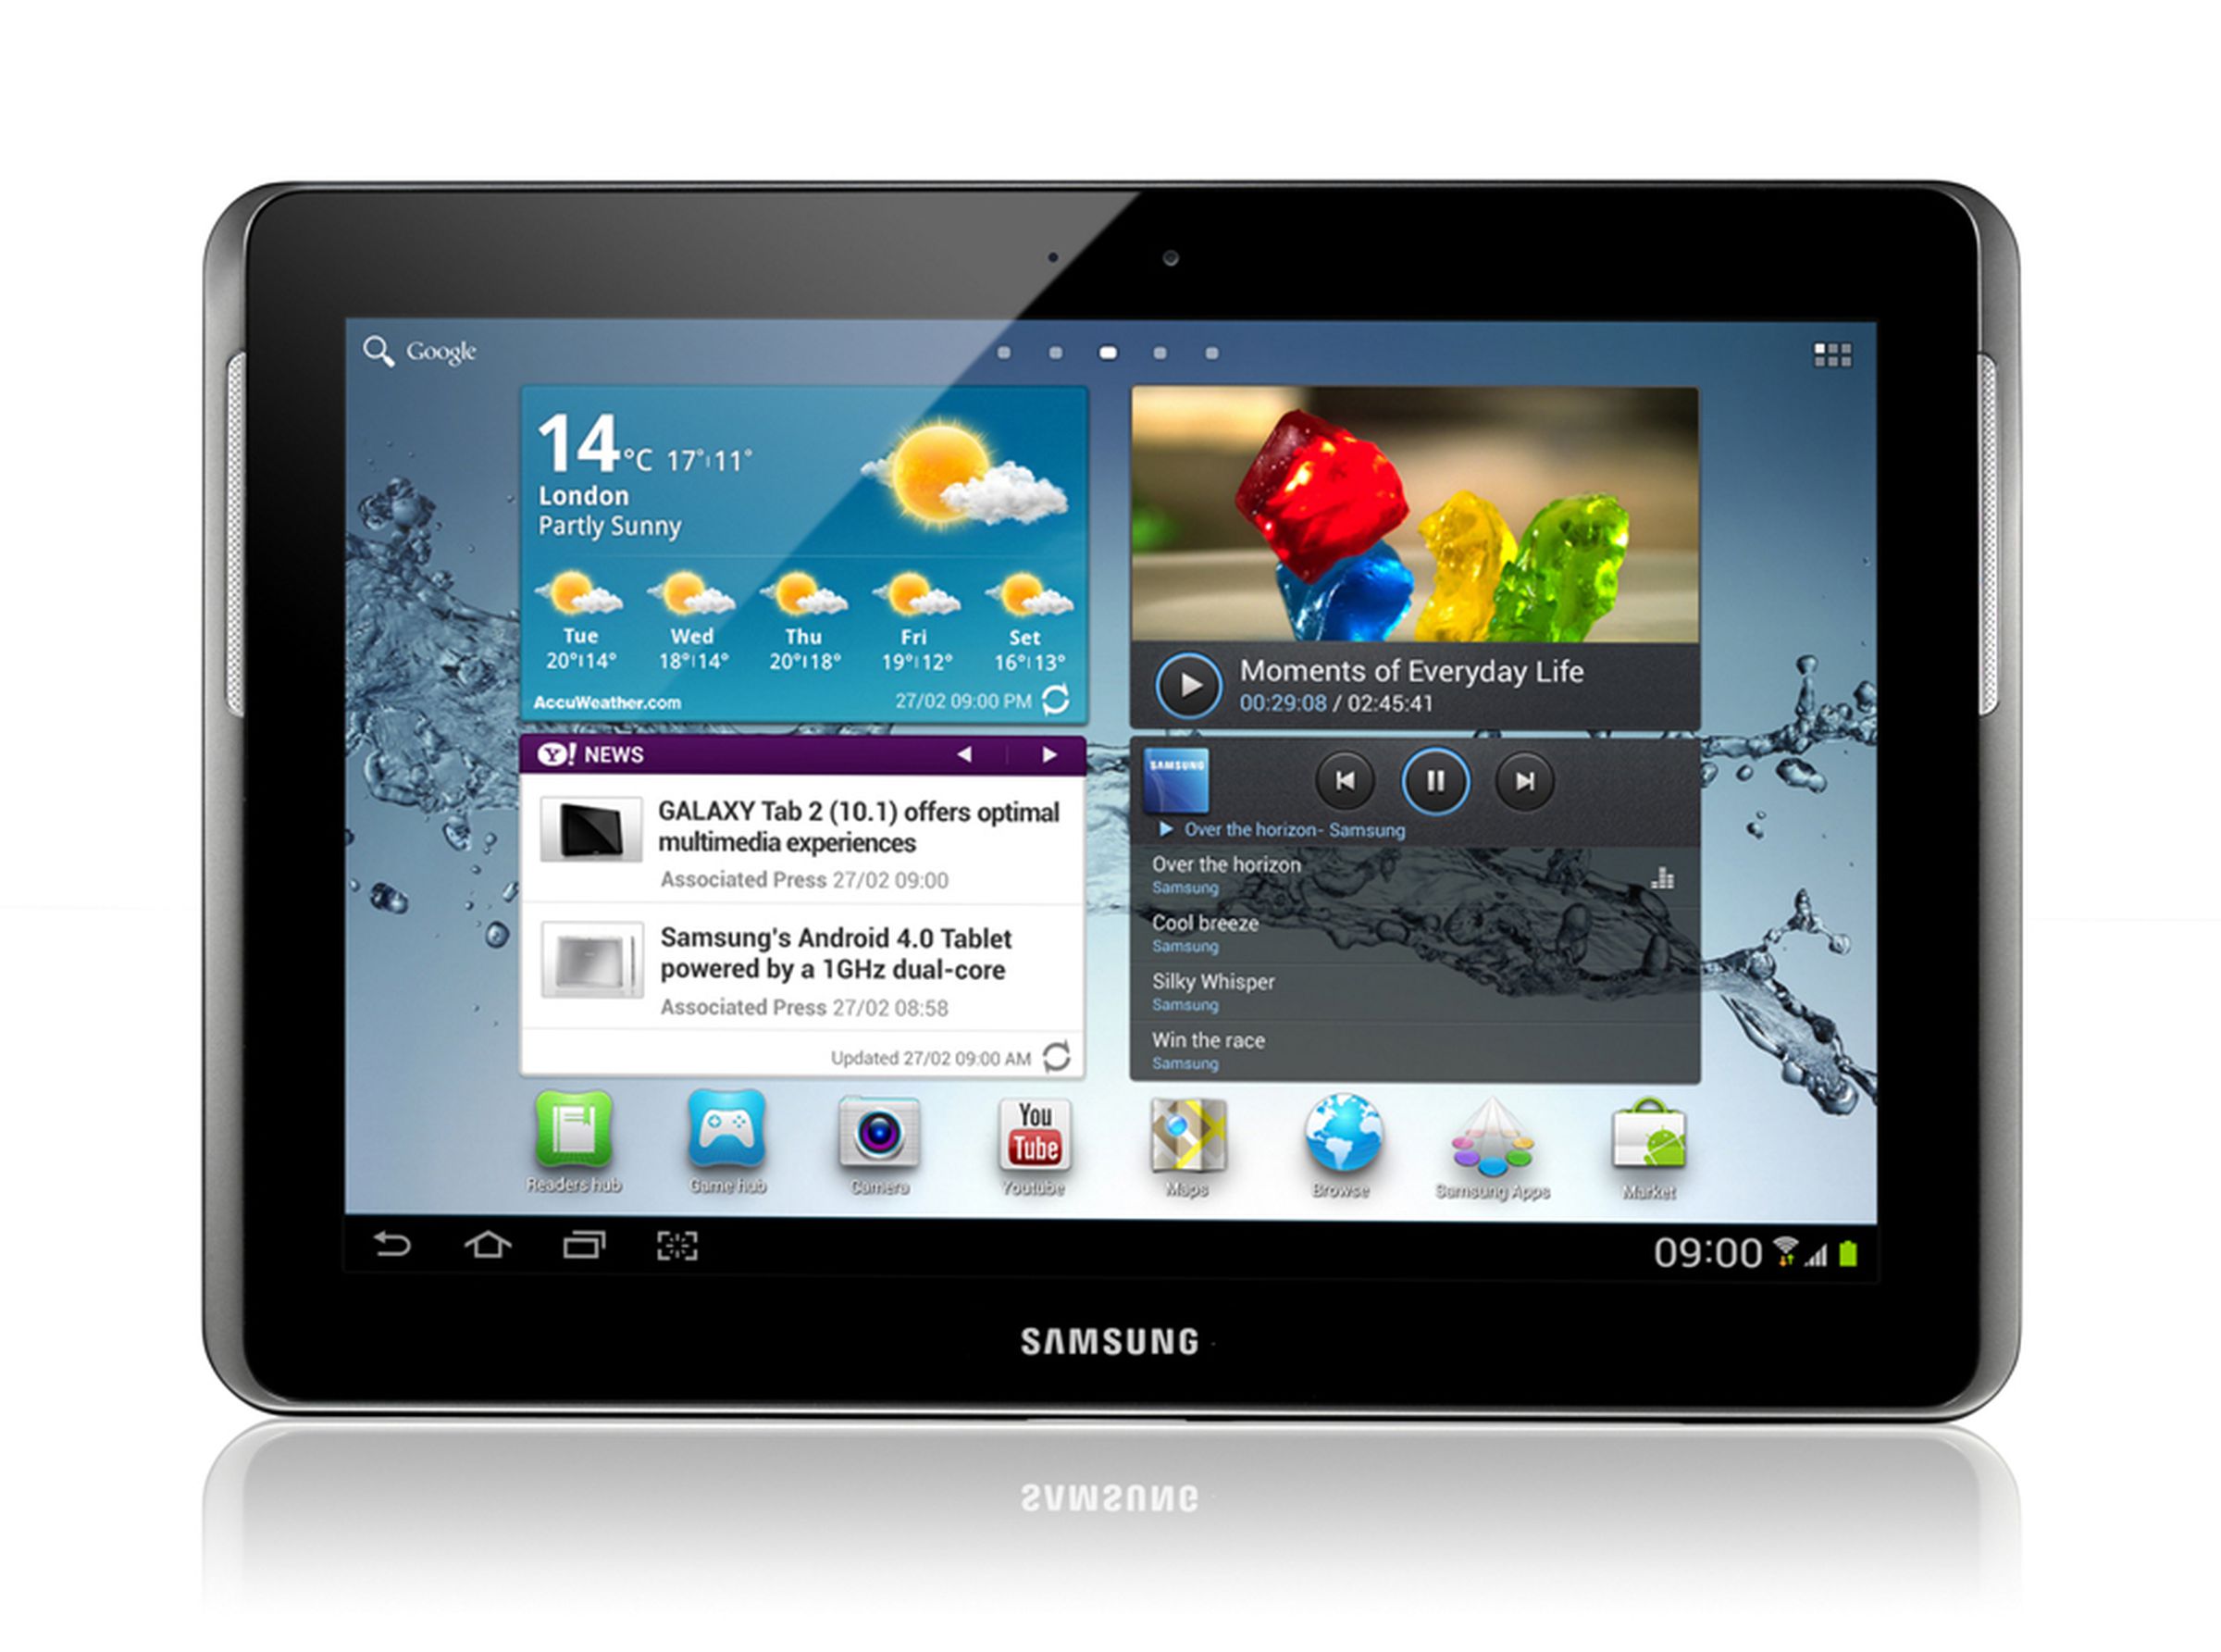 Samsung Galaxy Tab 2 (10.1) press images